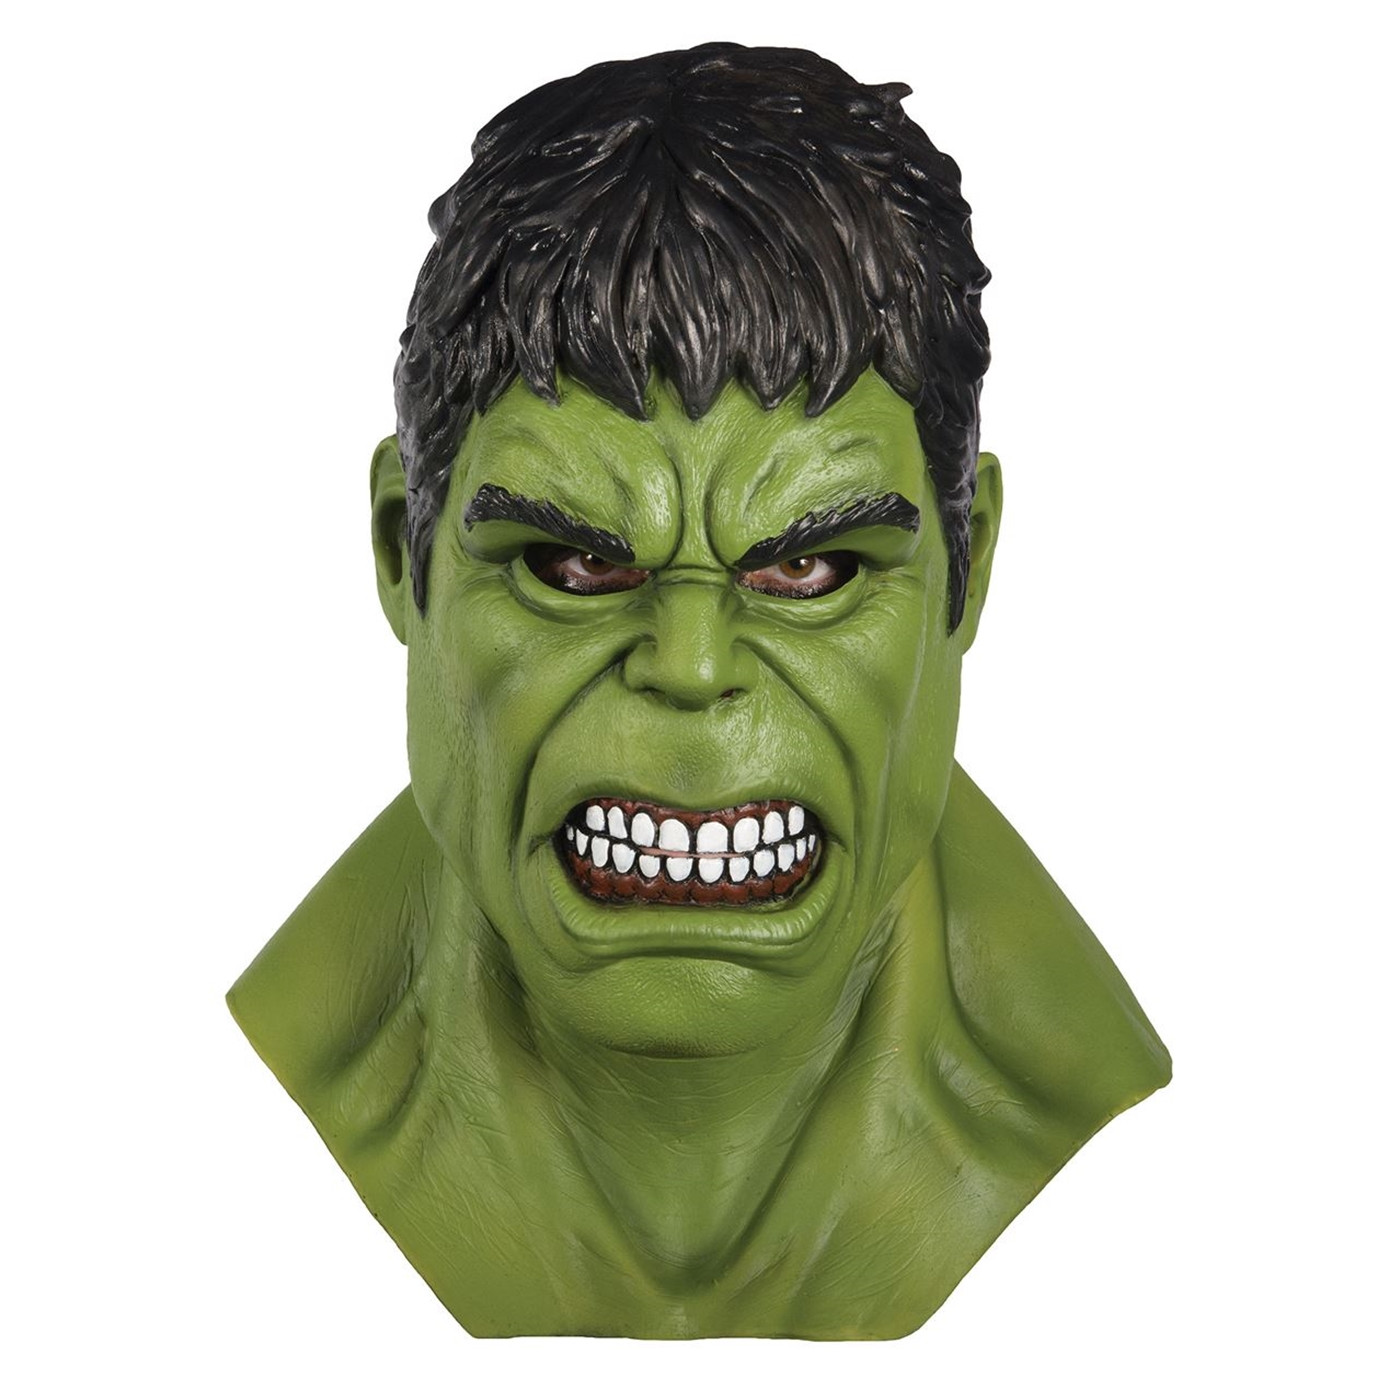 Incredible Hulk Mask